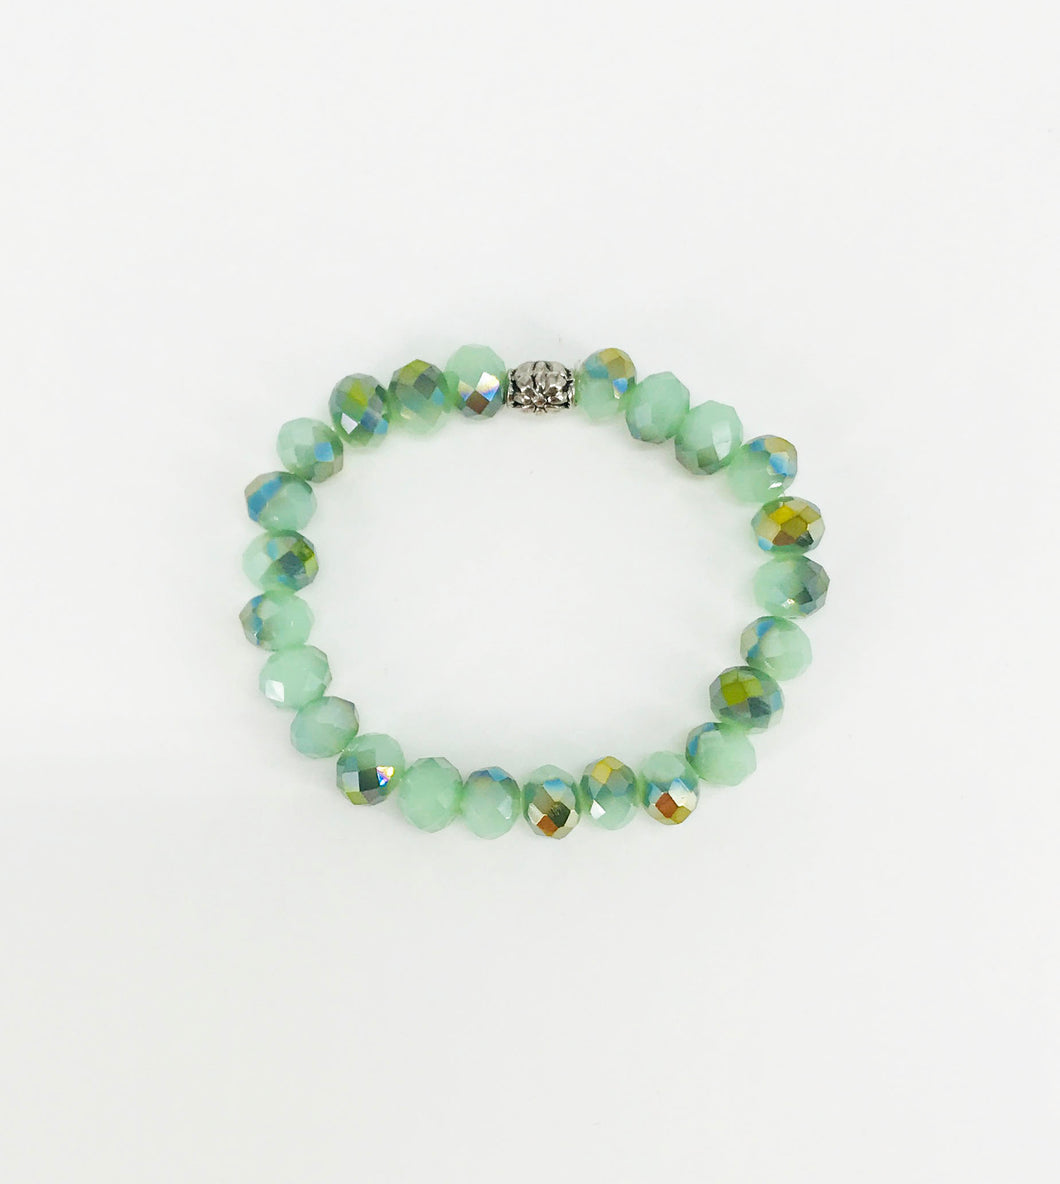 Mint Green Glass Bead Stretchy Bracelet